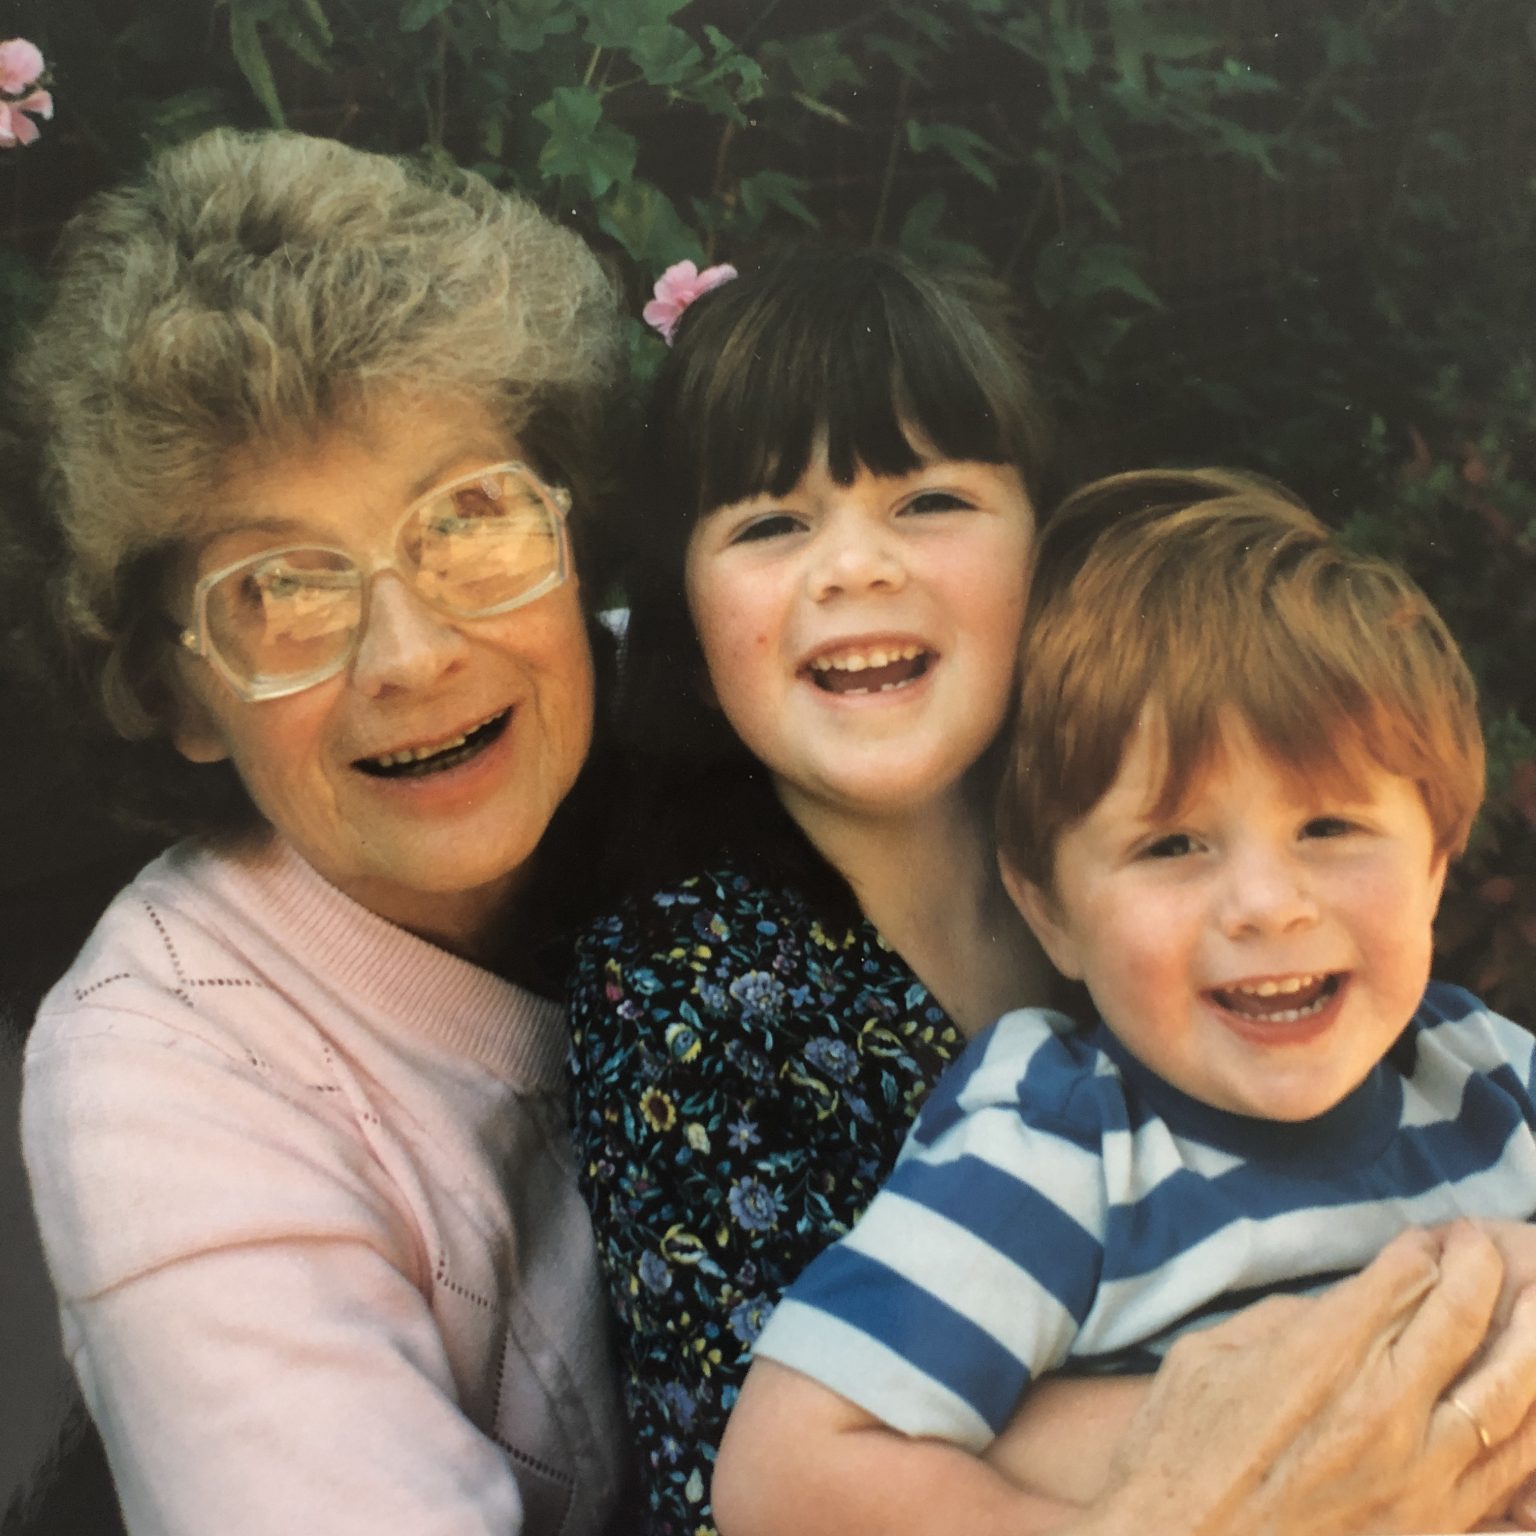 My mother loved her grandchildren